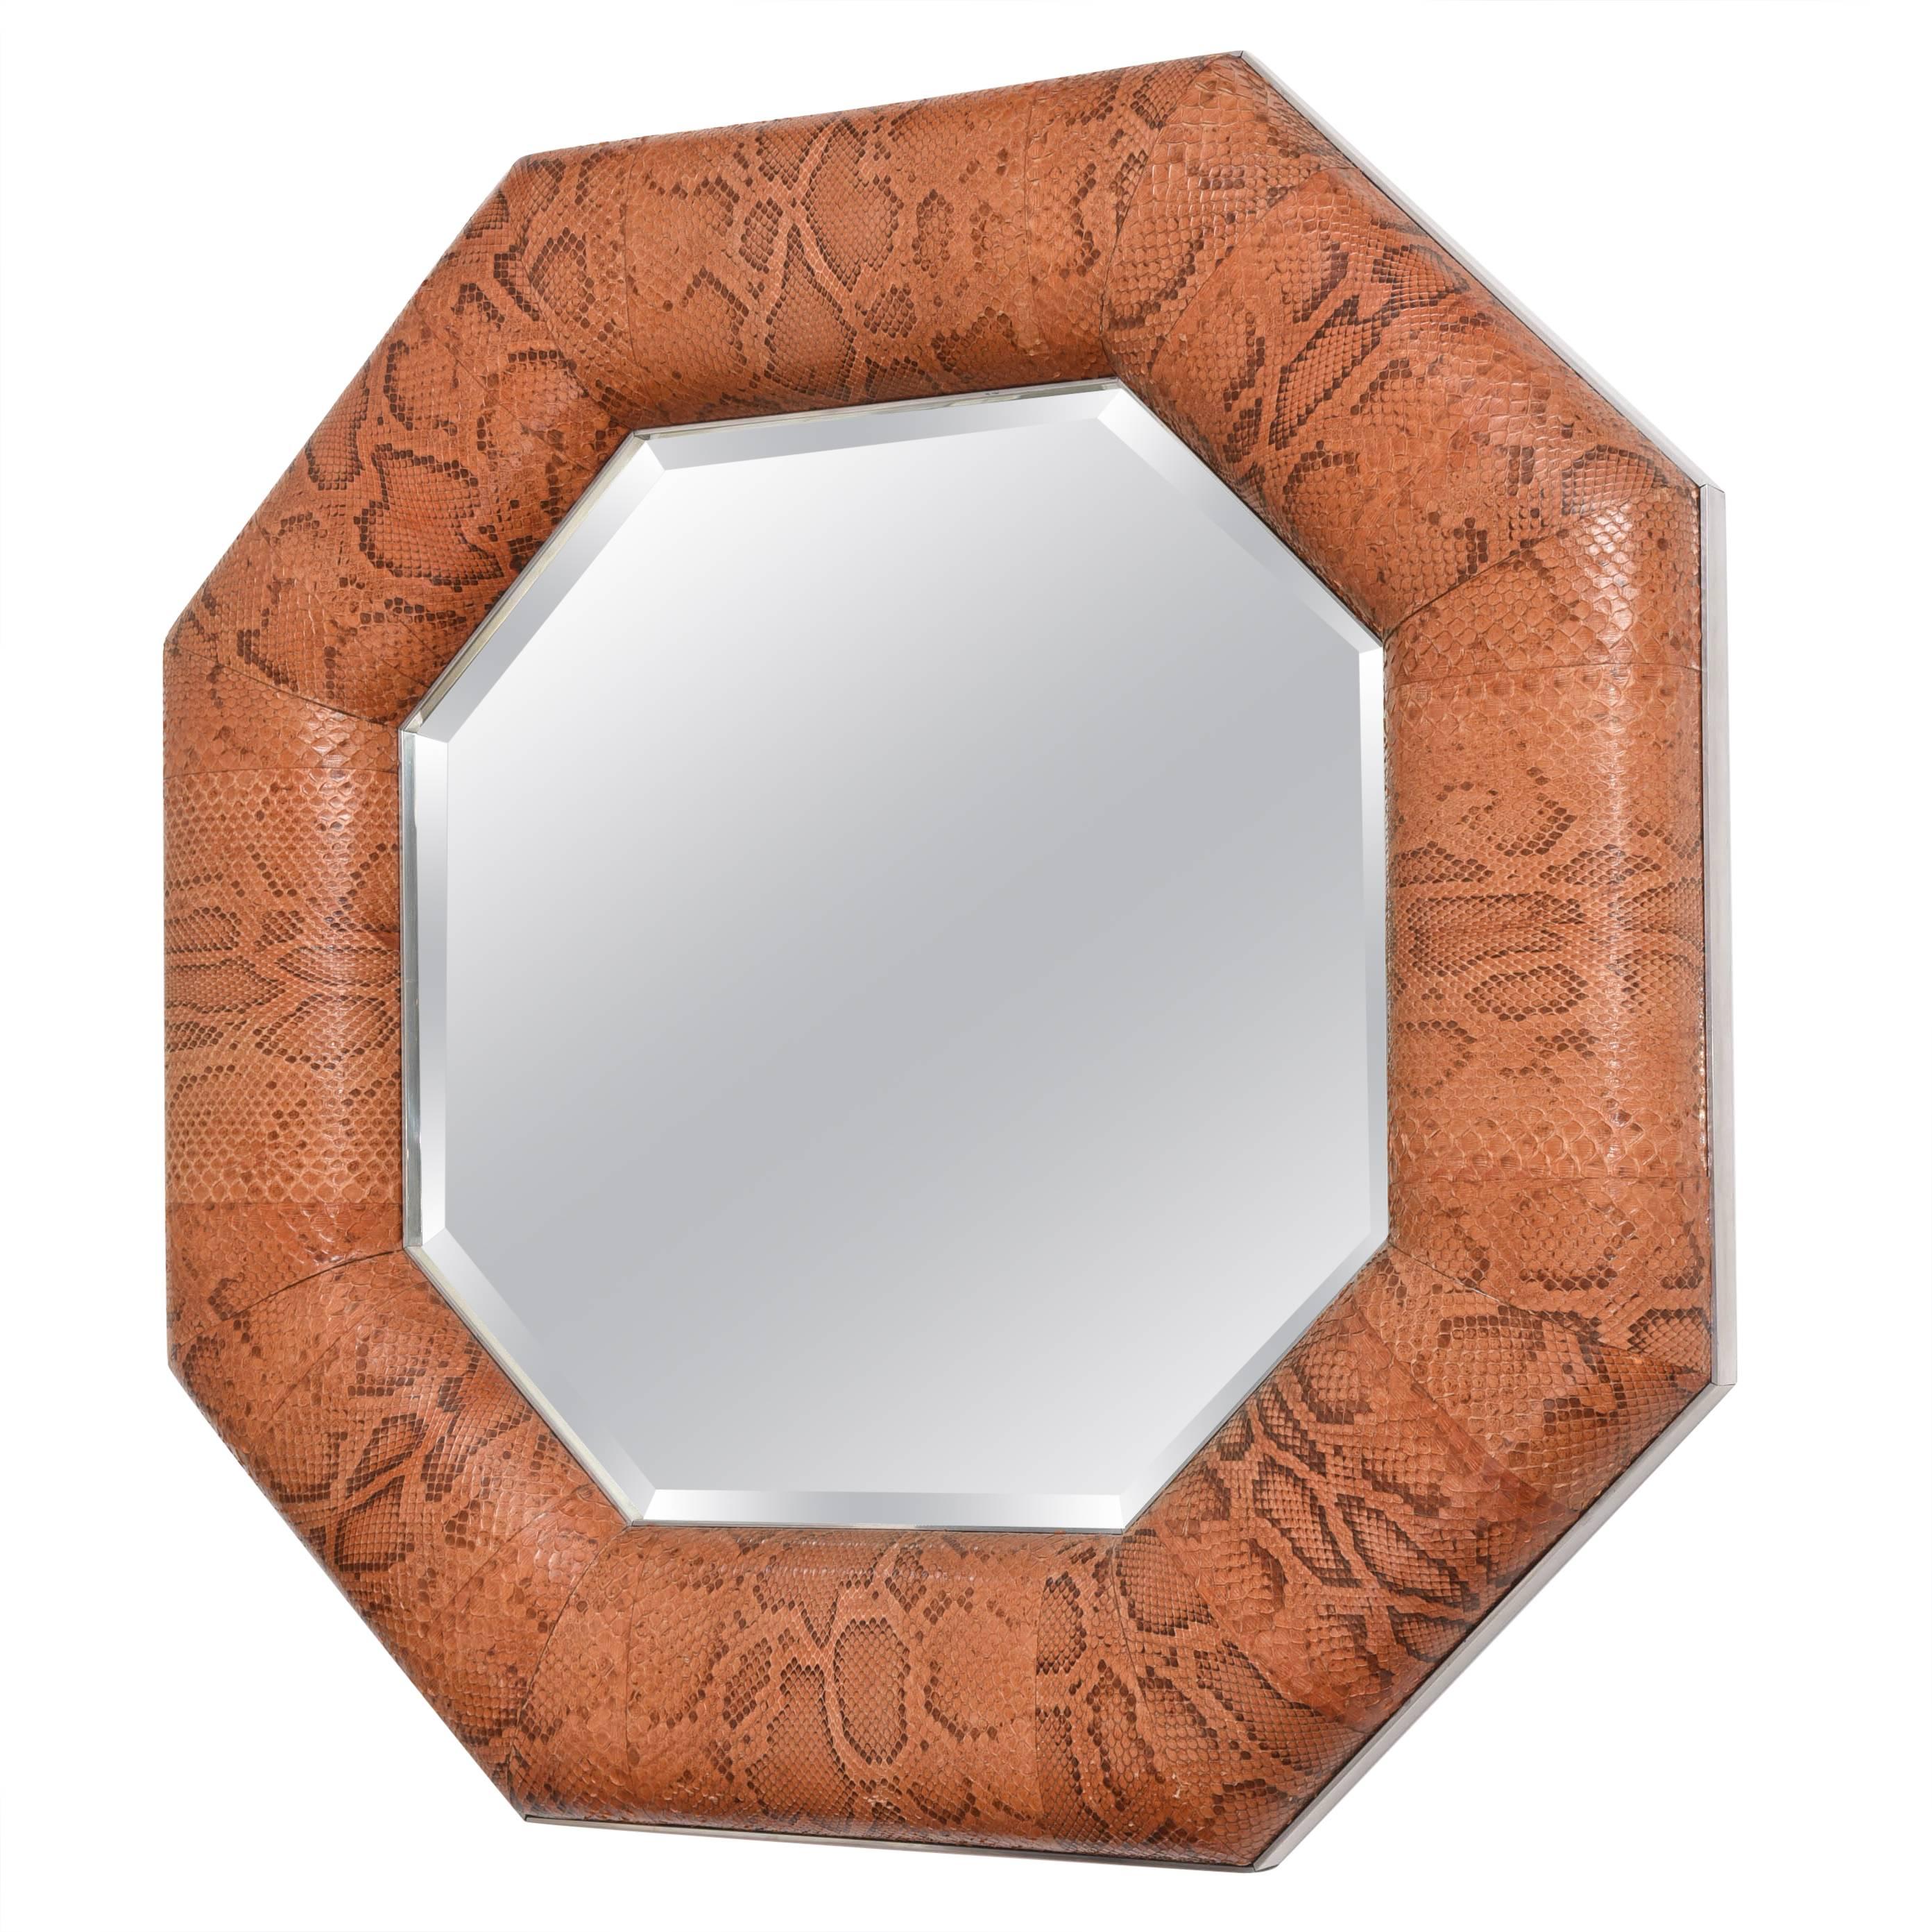 Octagonal Mirror, Dyed-Python Snakeskin, Polished Steel, Style of Karl Springer